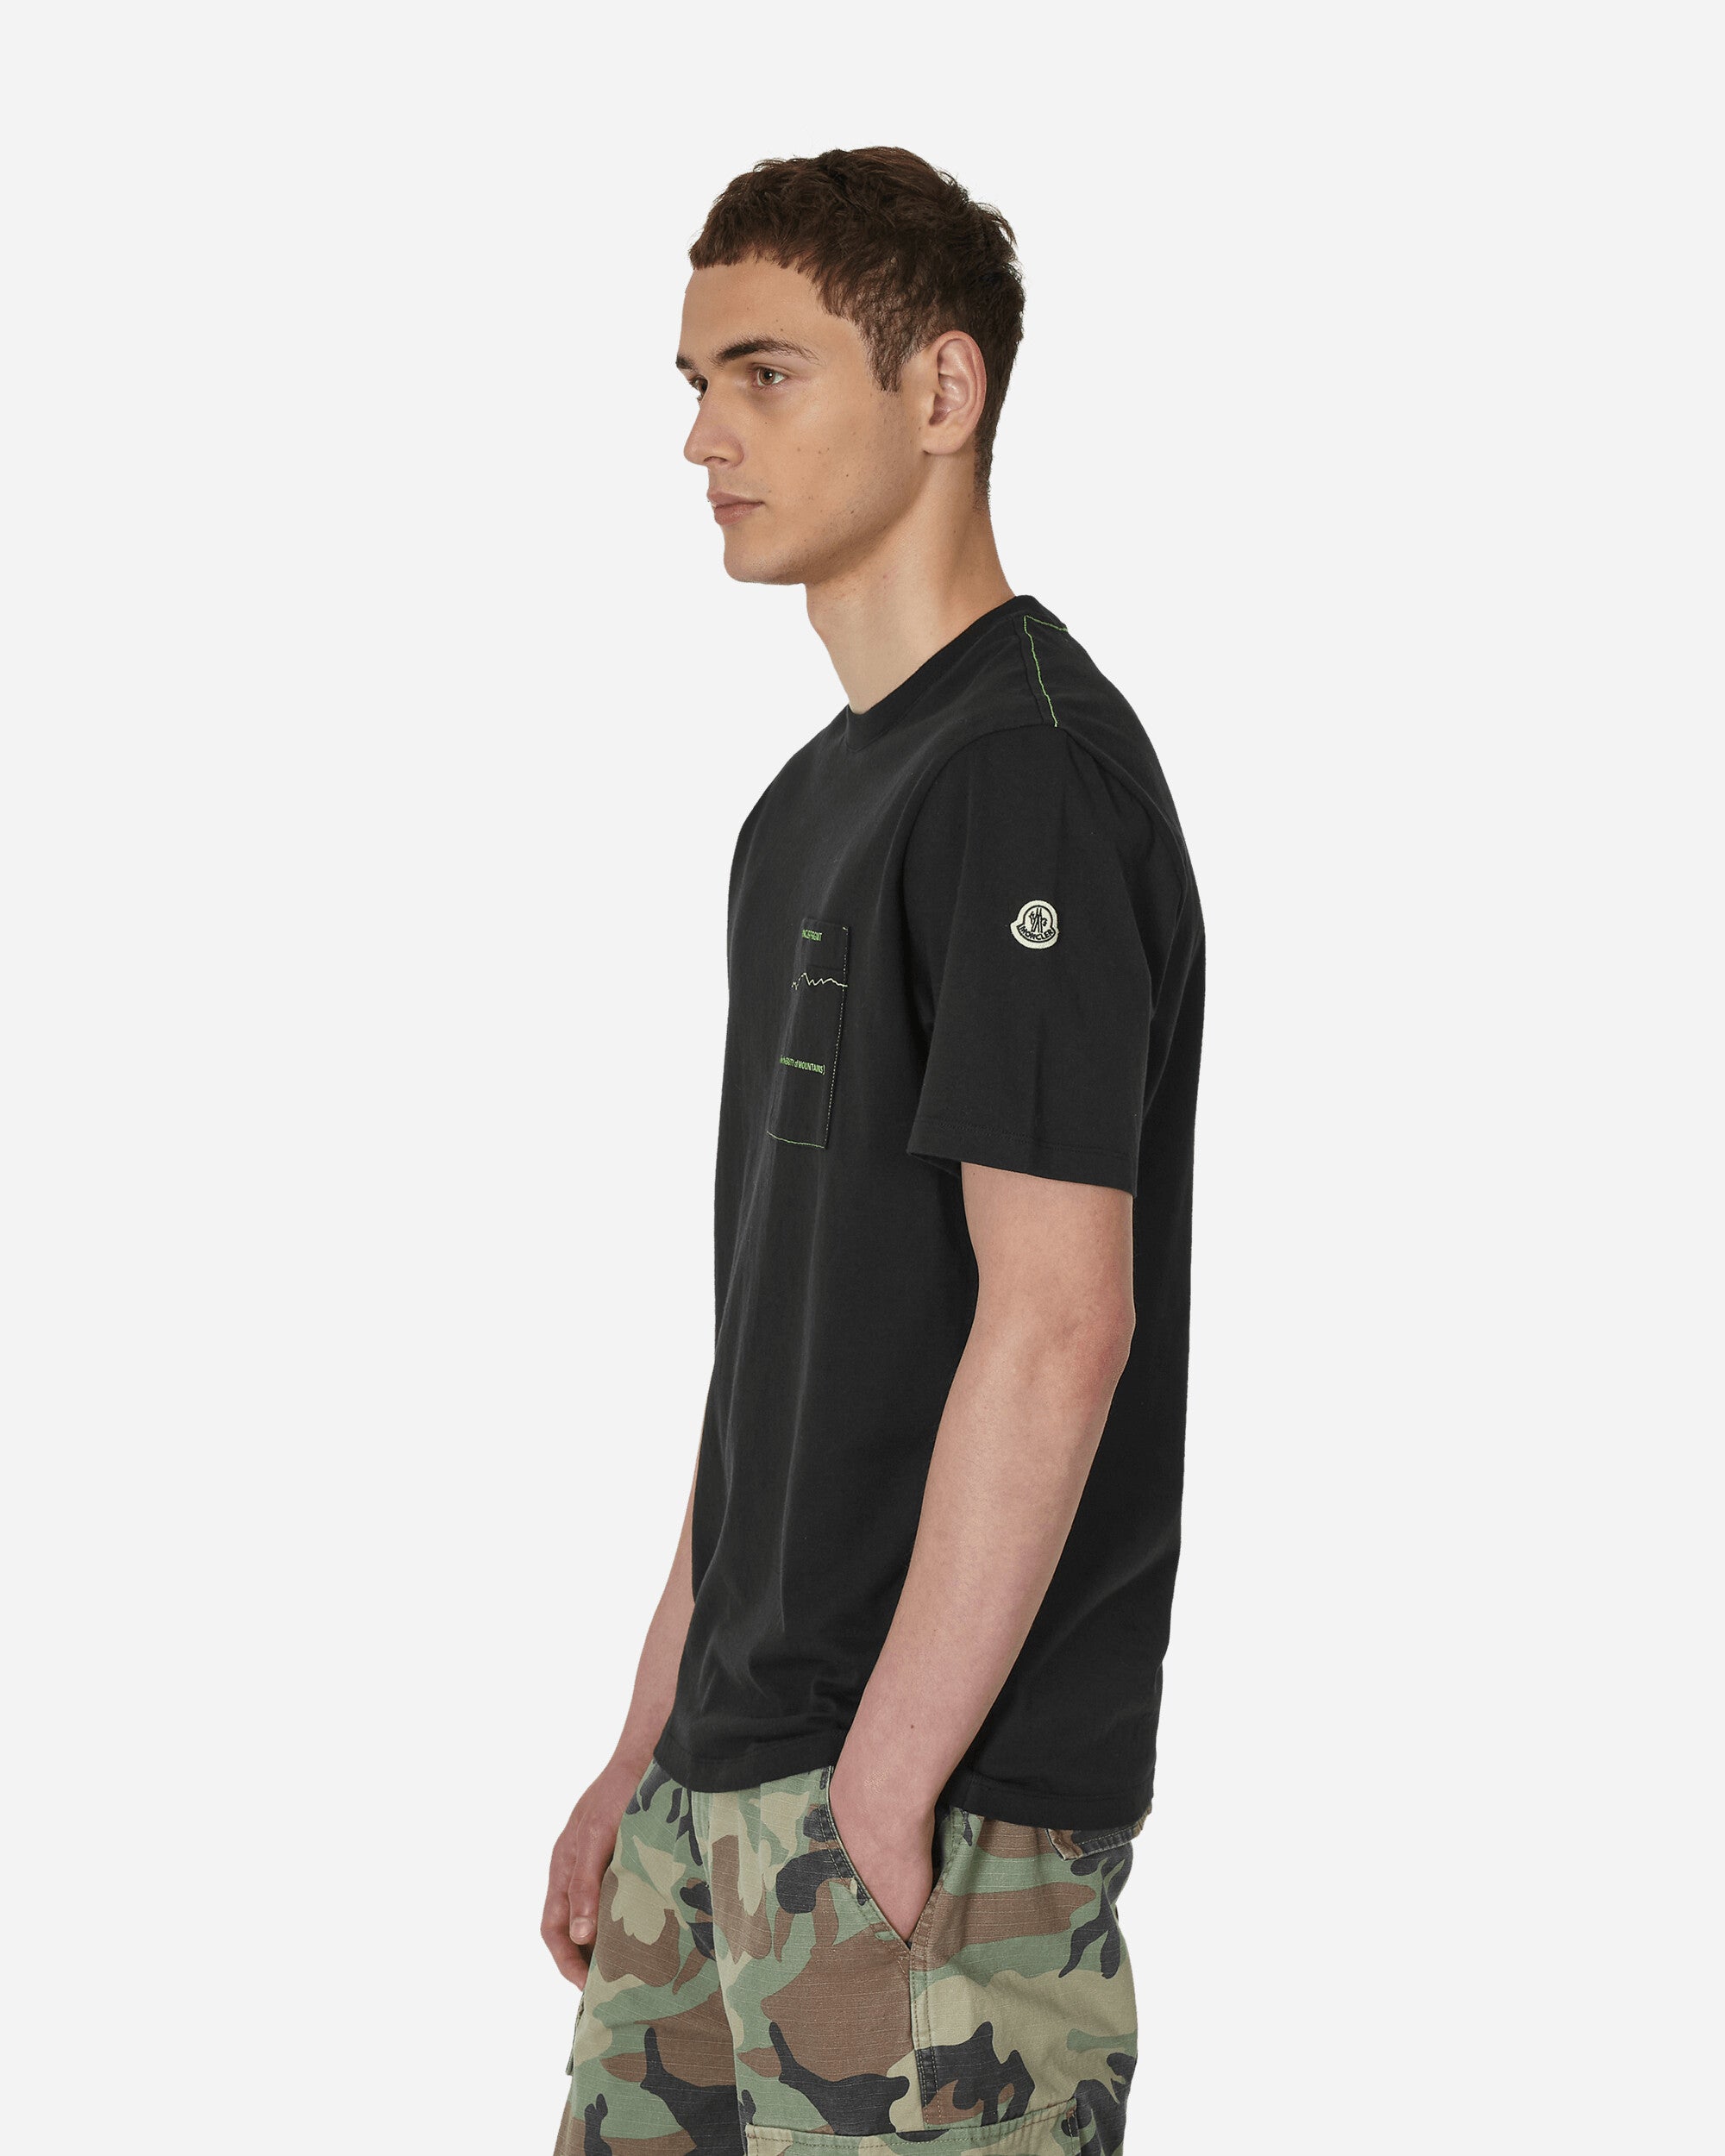 Moncler Genius T-Shirt X Fragment Black T-Shirts Shortsleeve 8C00005M3265 999